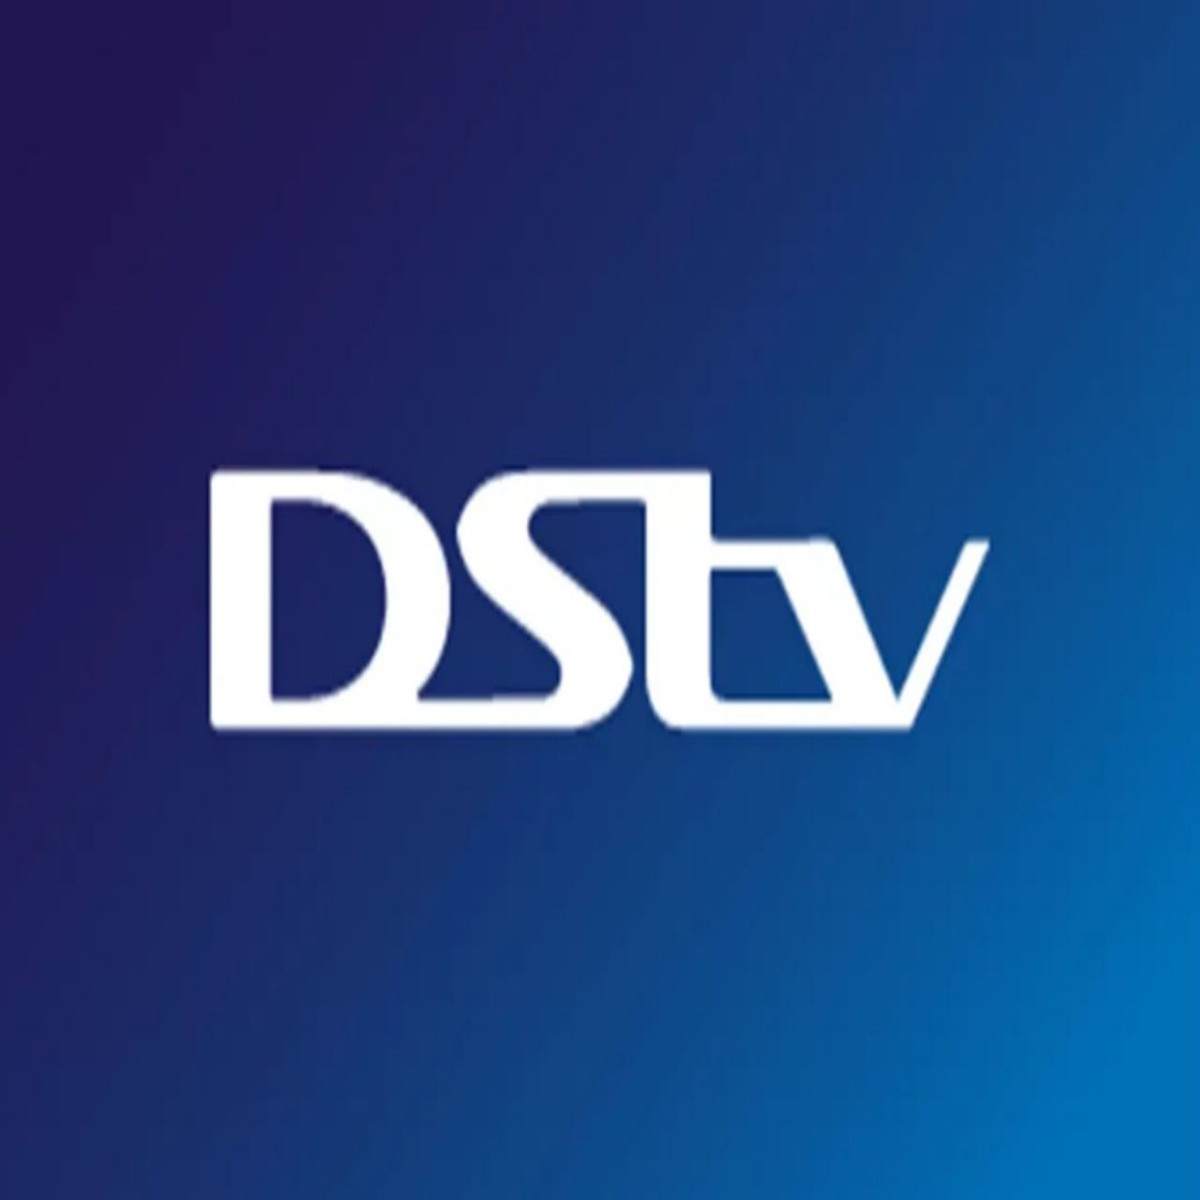 DSTV 2023 Graduate Trainee Programme